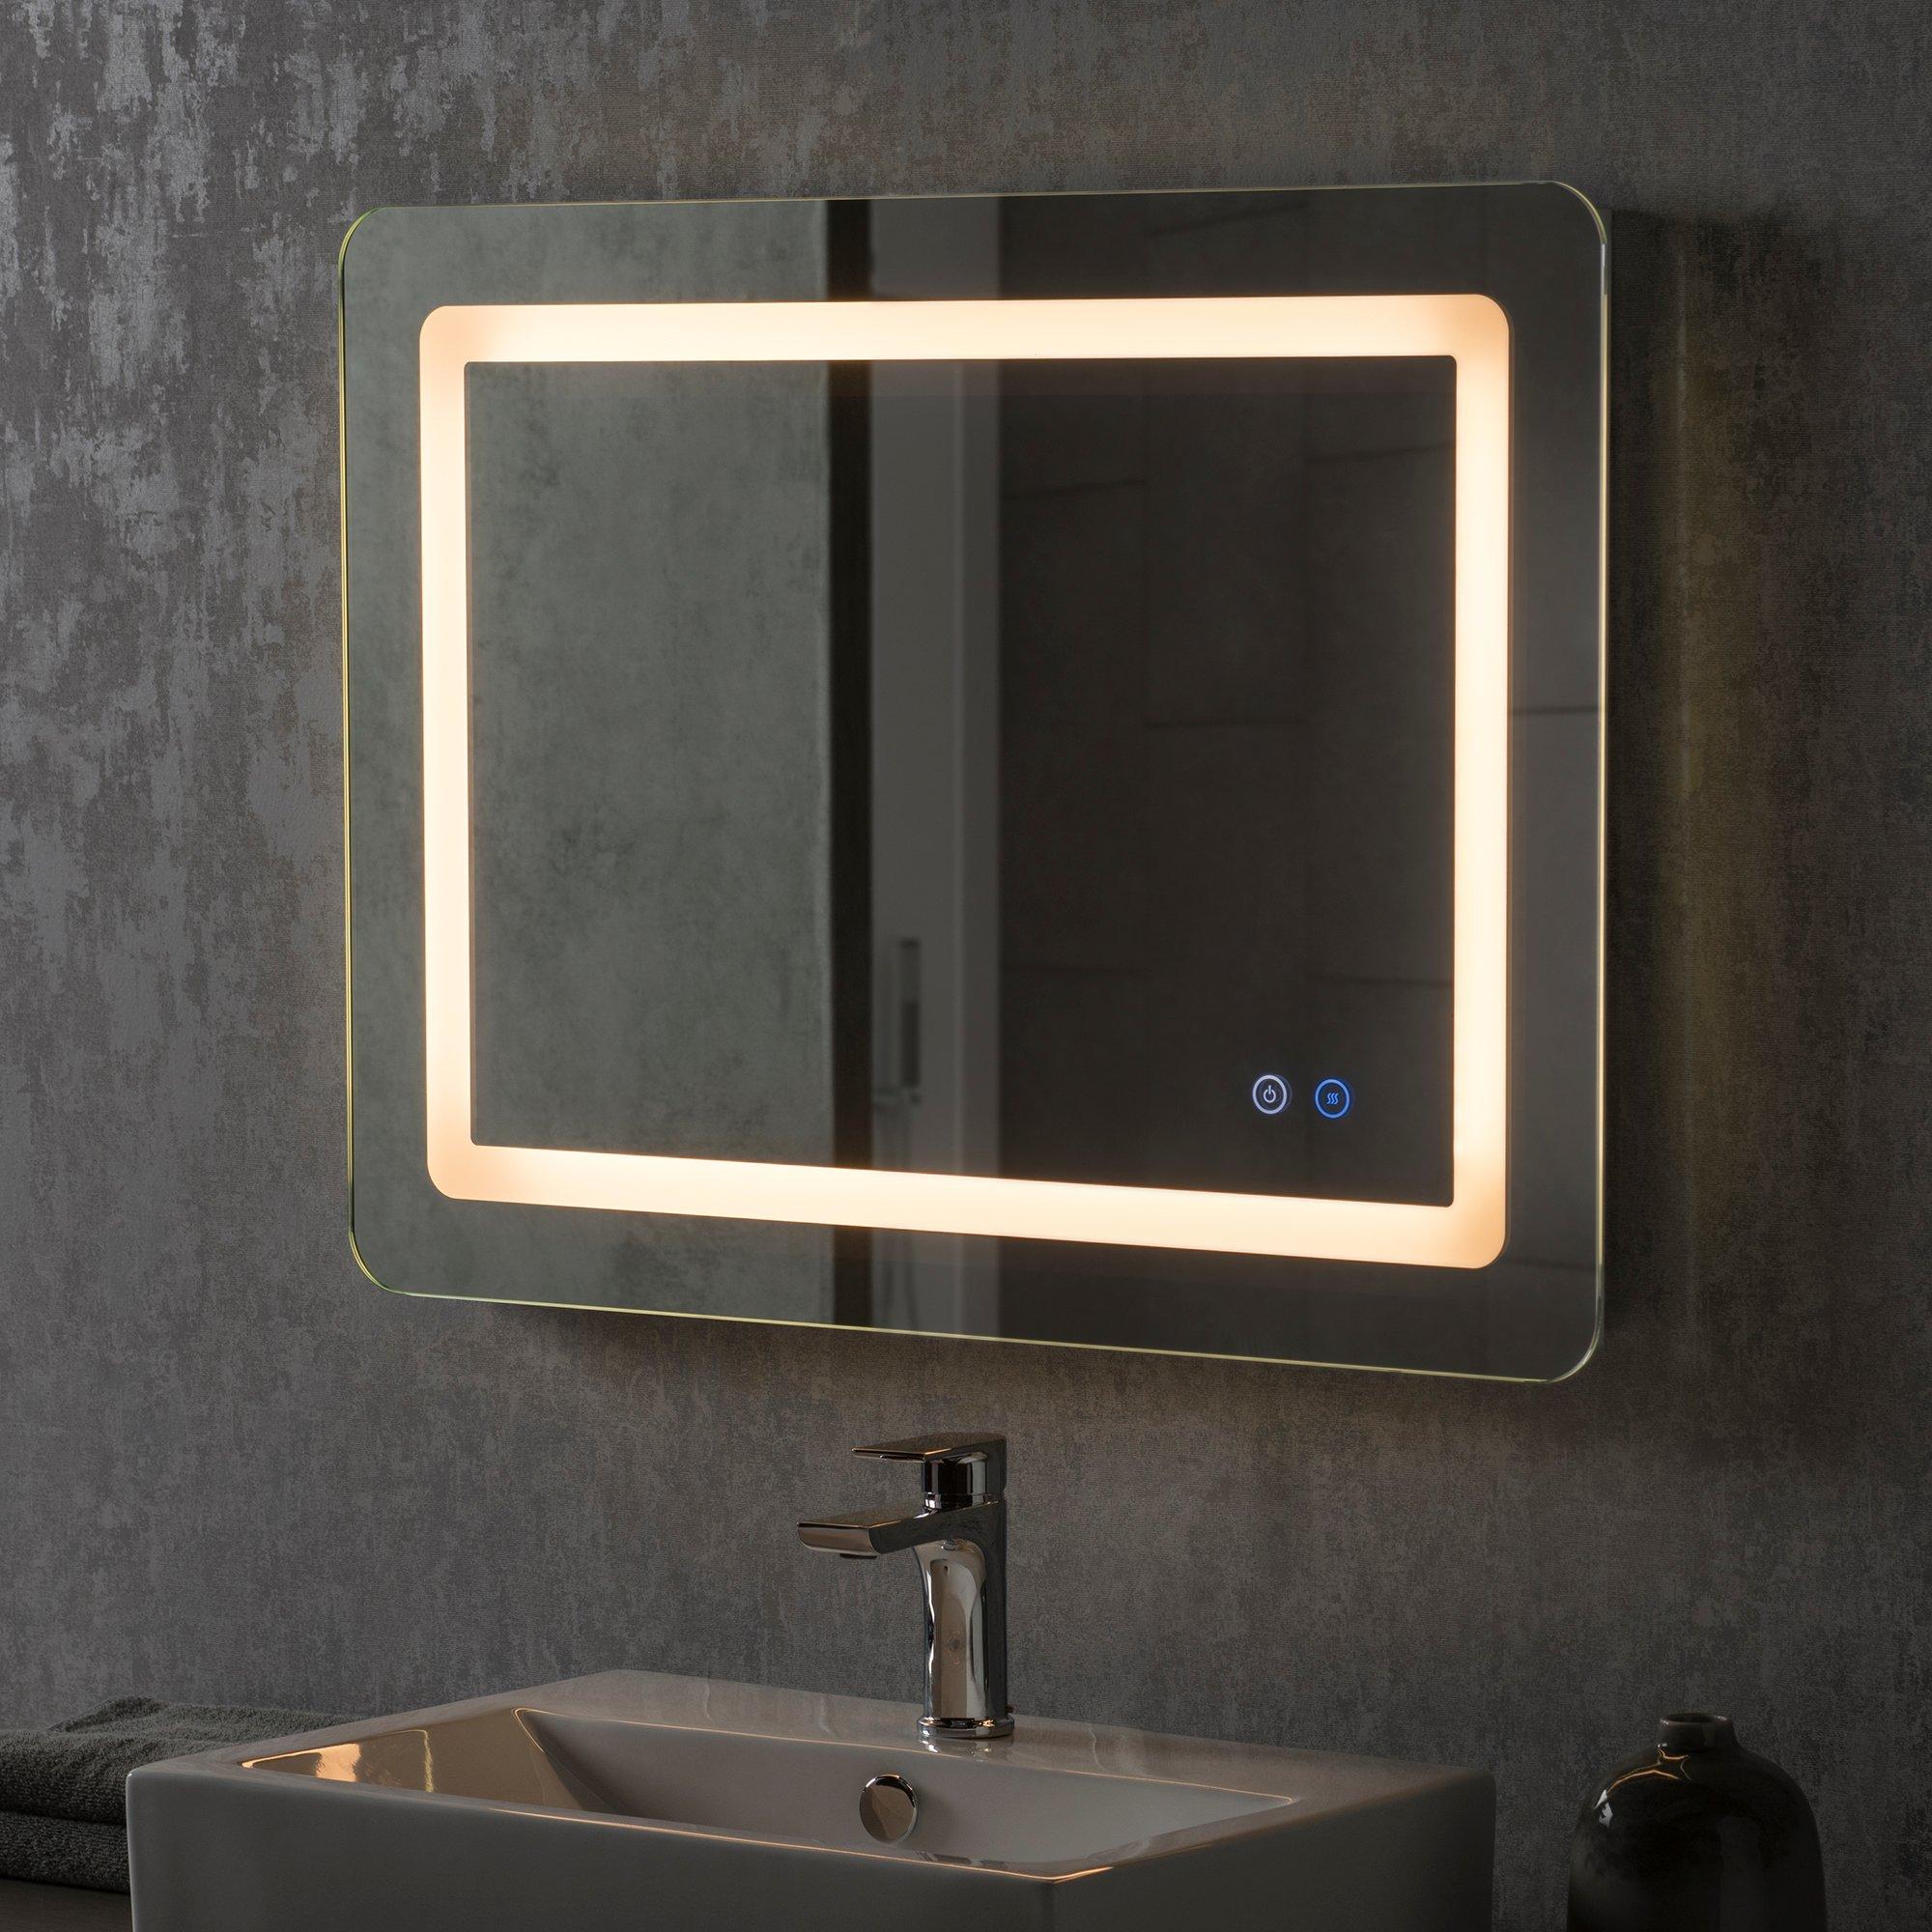 LED Bathroom mirror 80(w) x 60cm(h) Dimmable with Anti-fog